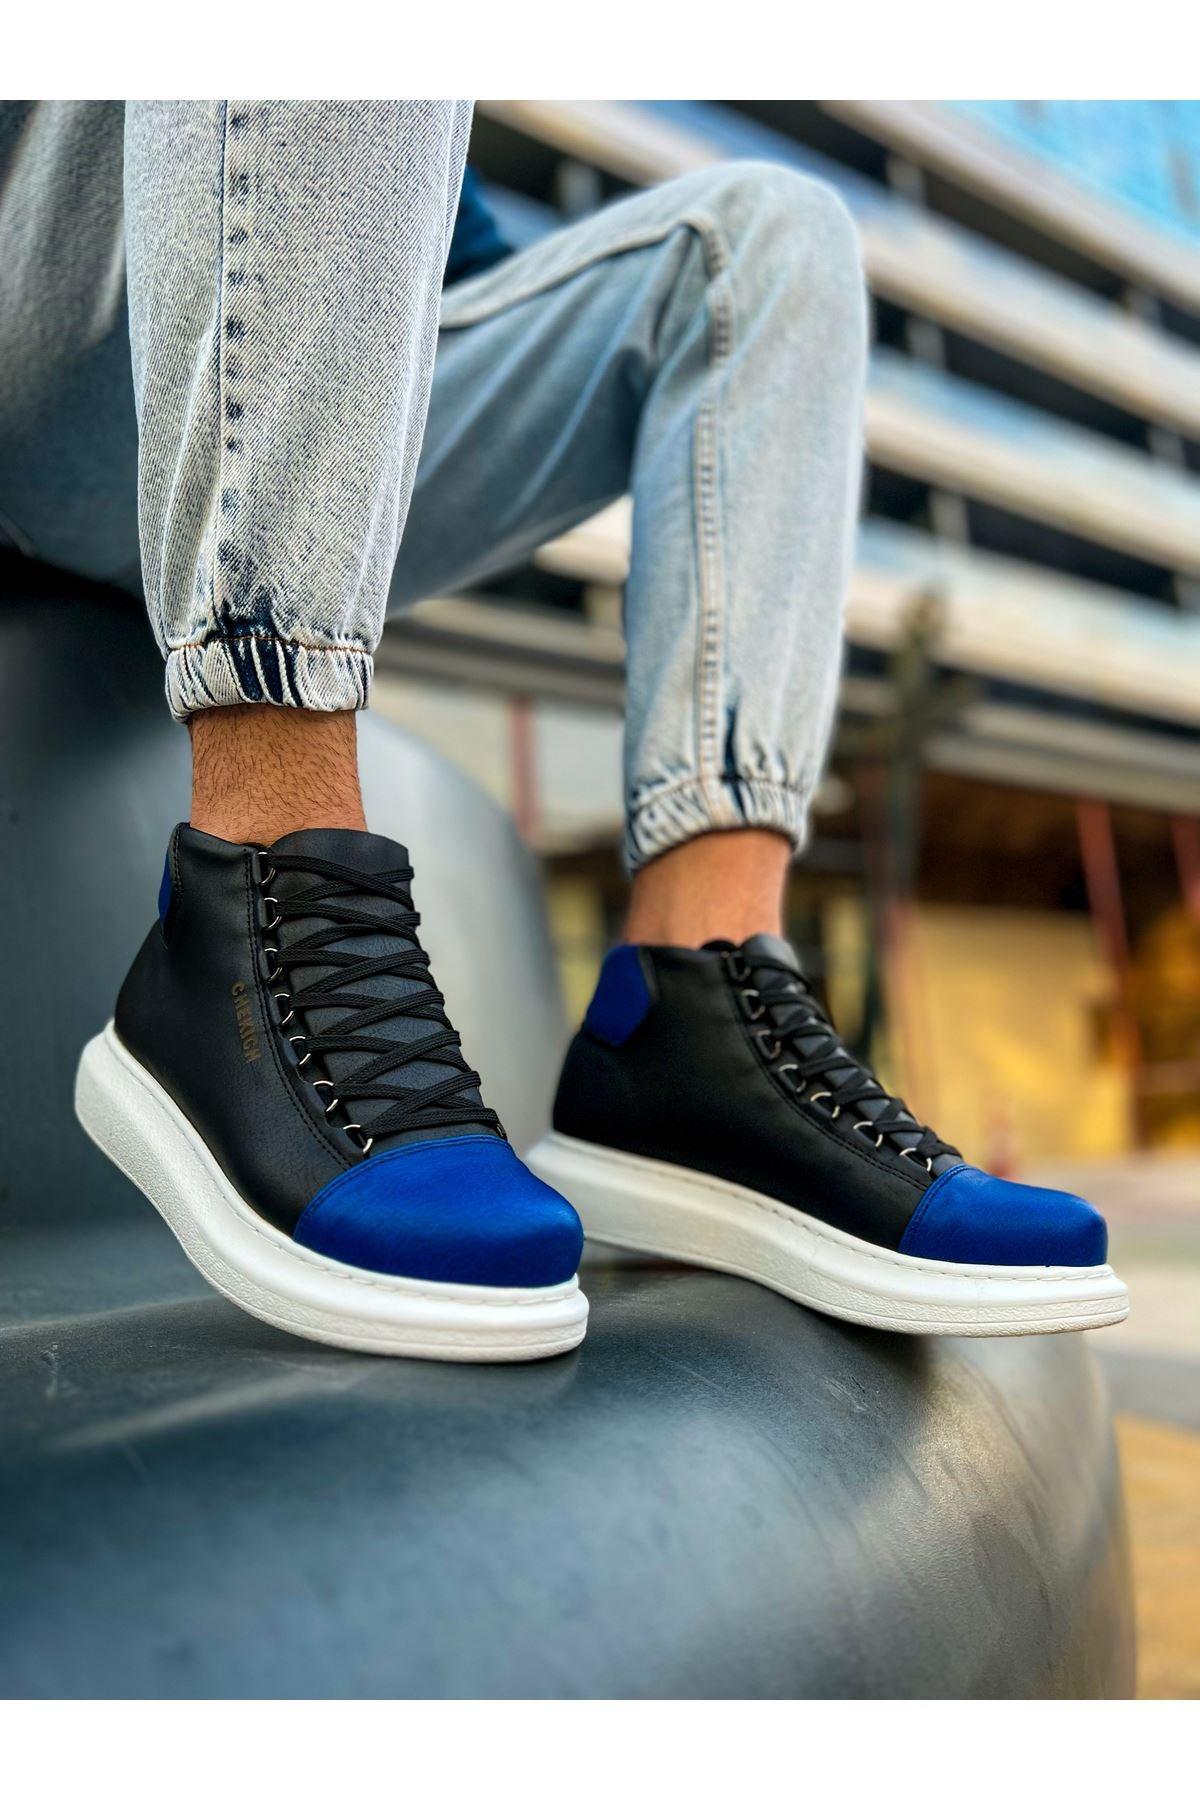 Chekich CH258 GBT Men's shoes sneakers Boots BLACK/SAX BLUE - STREET MODE ™